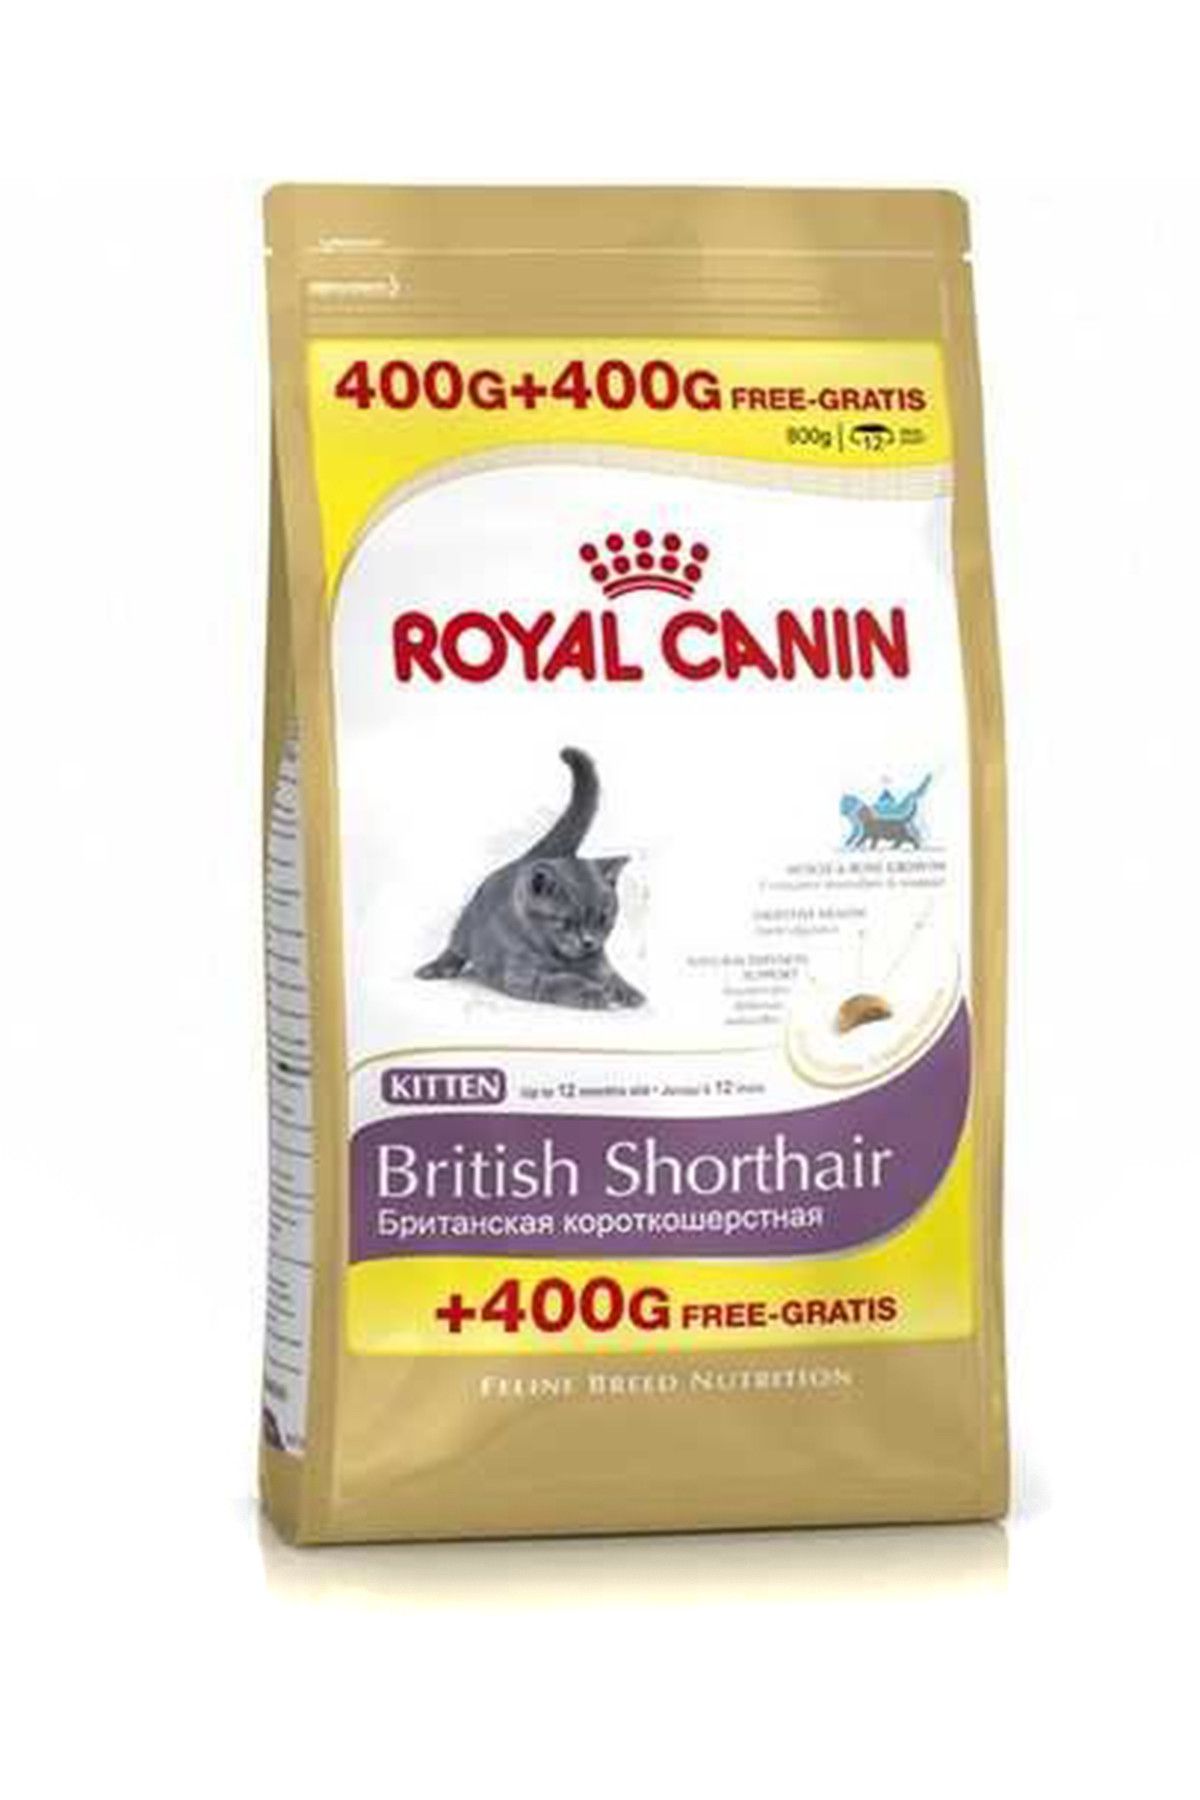 Royal Canin Kitten British Shorthair Yavru Kedi Maması 400+400 gr Bonus